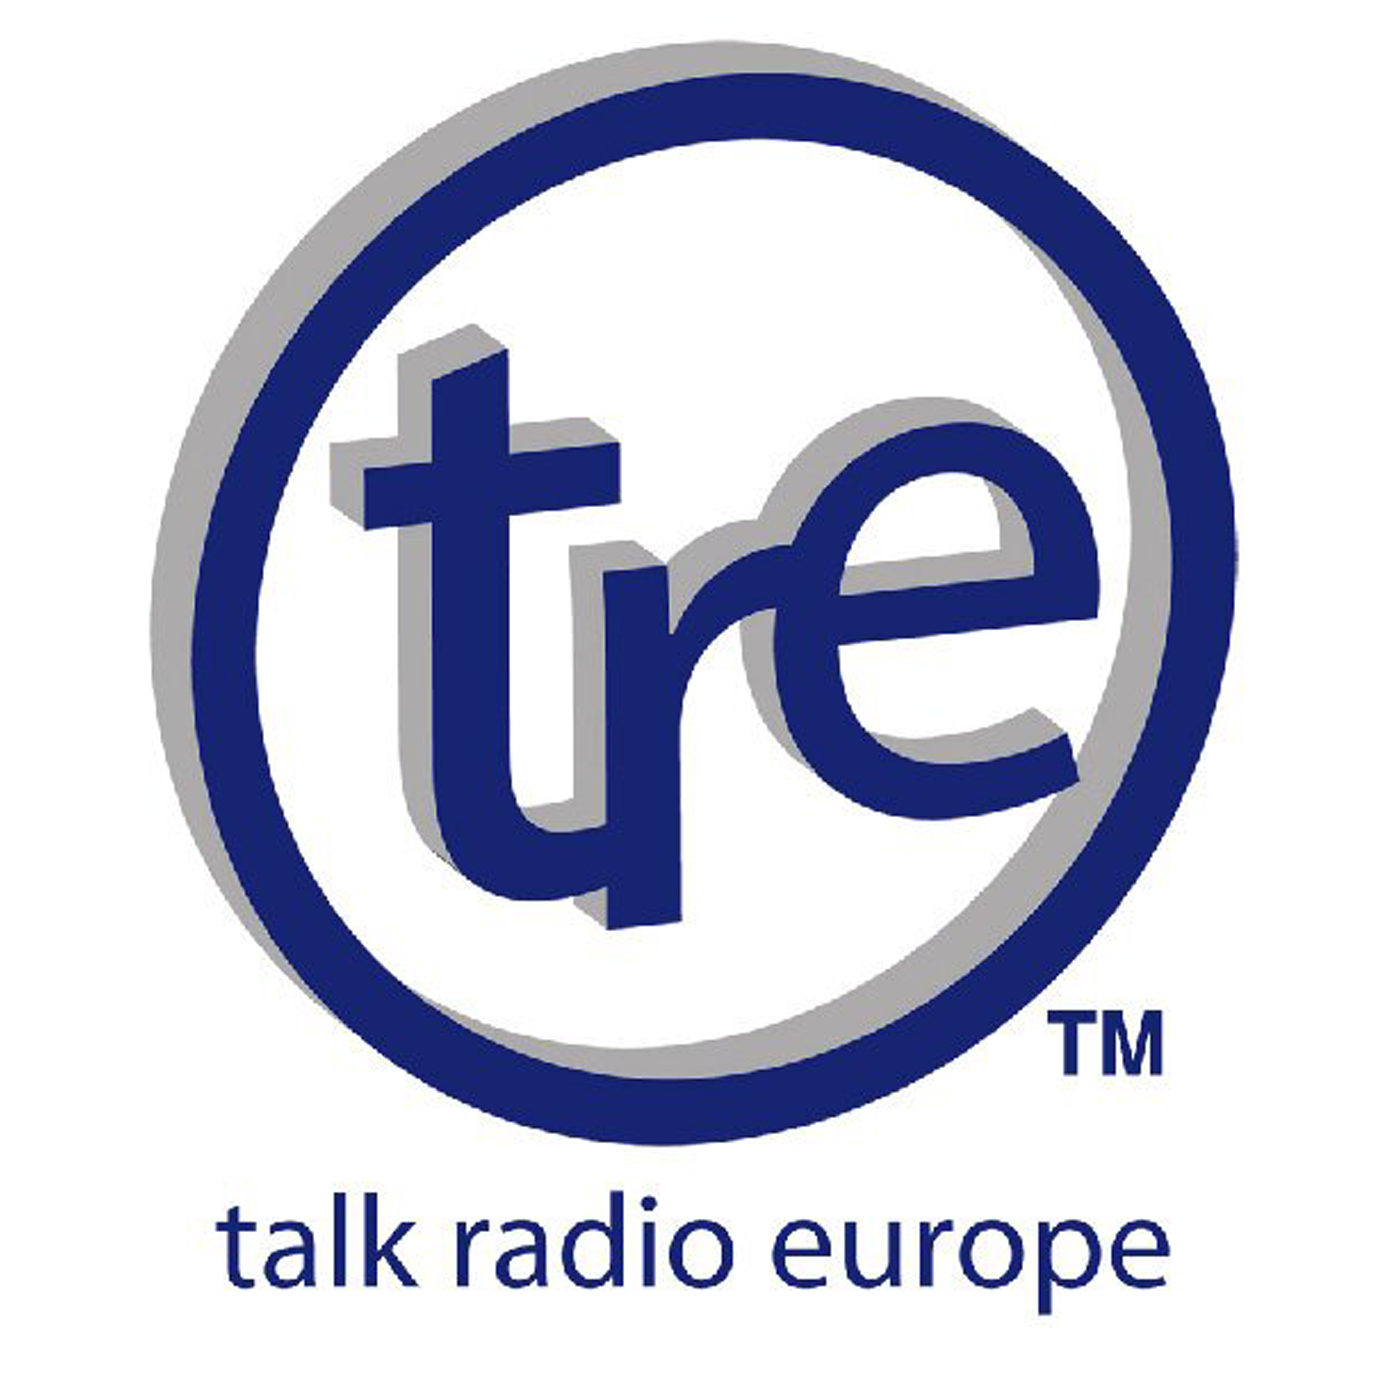 Talk Radio Europe | Spain's English Speaking Talk Radio